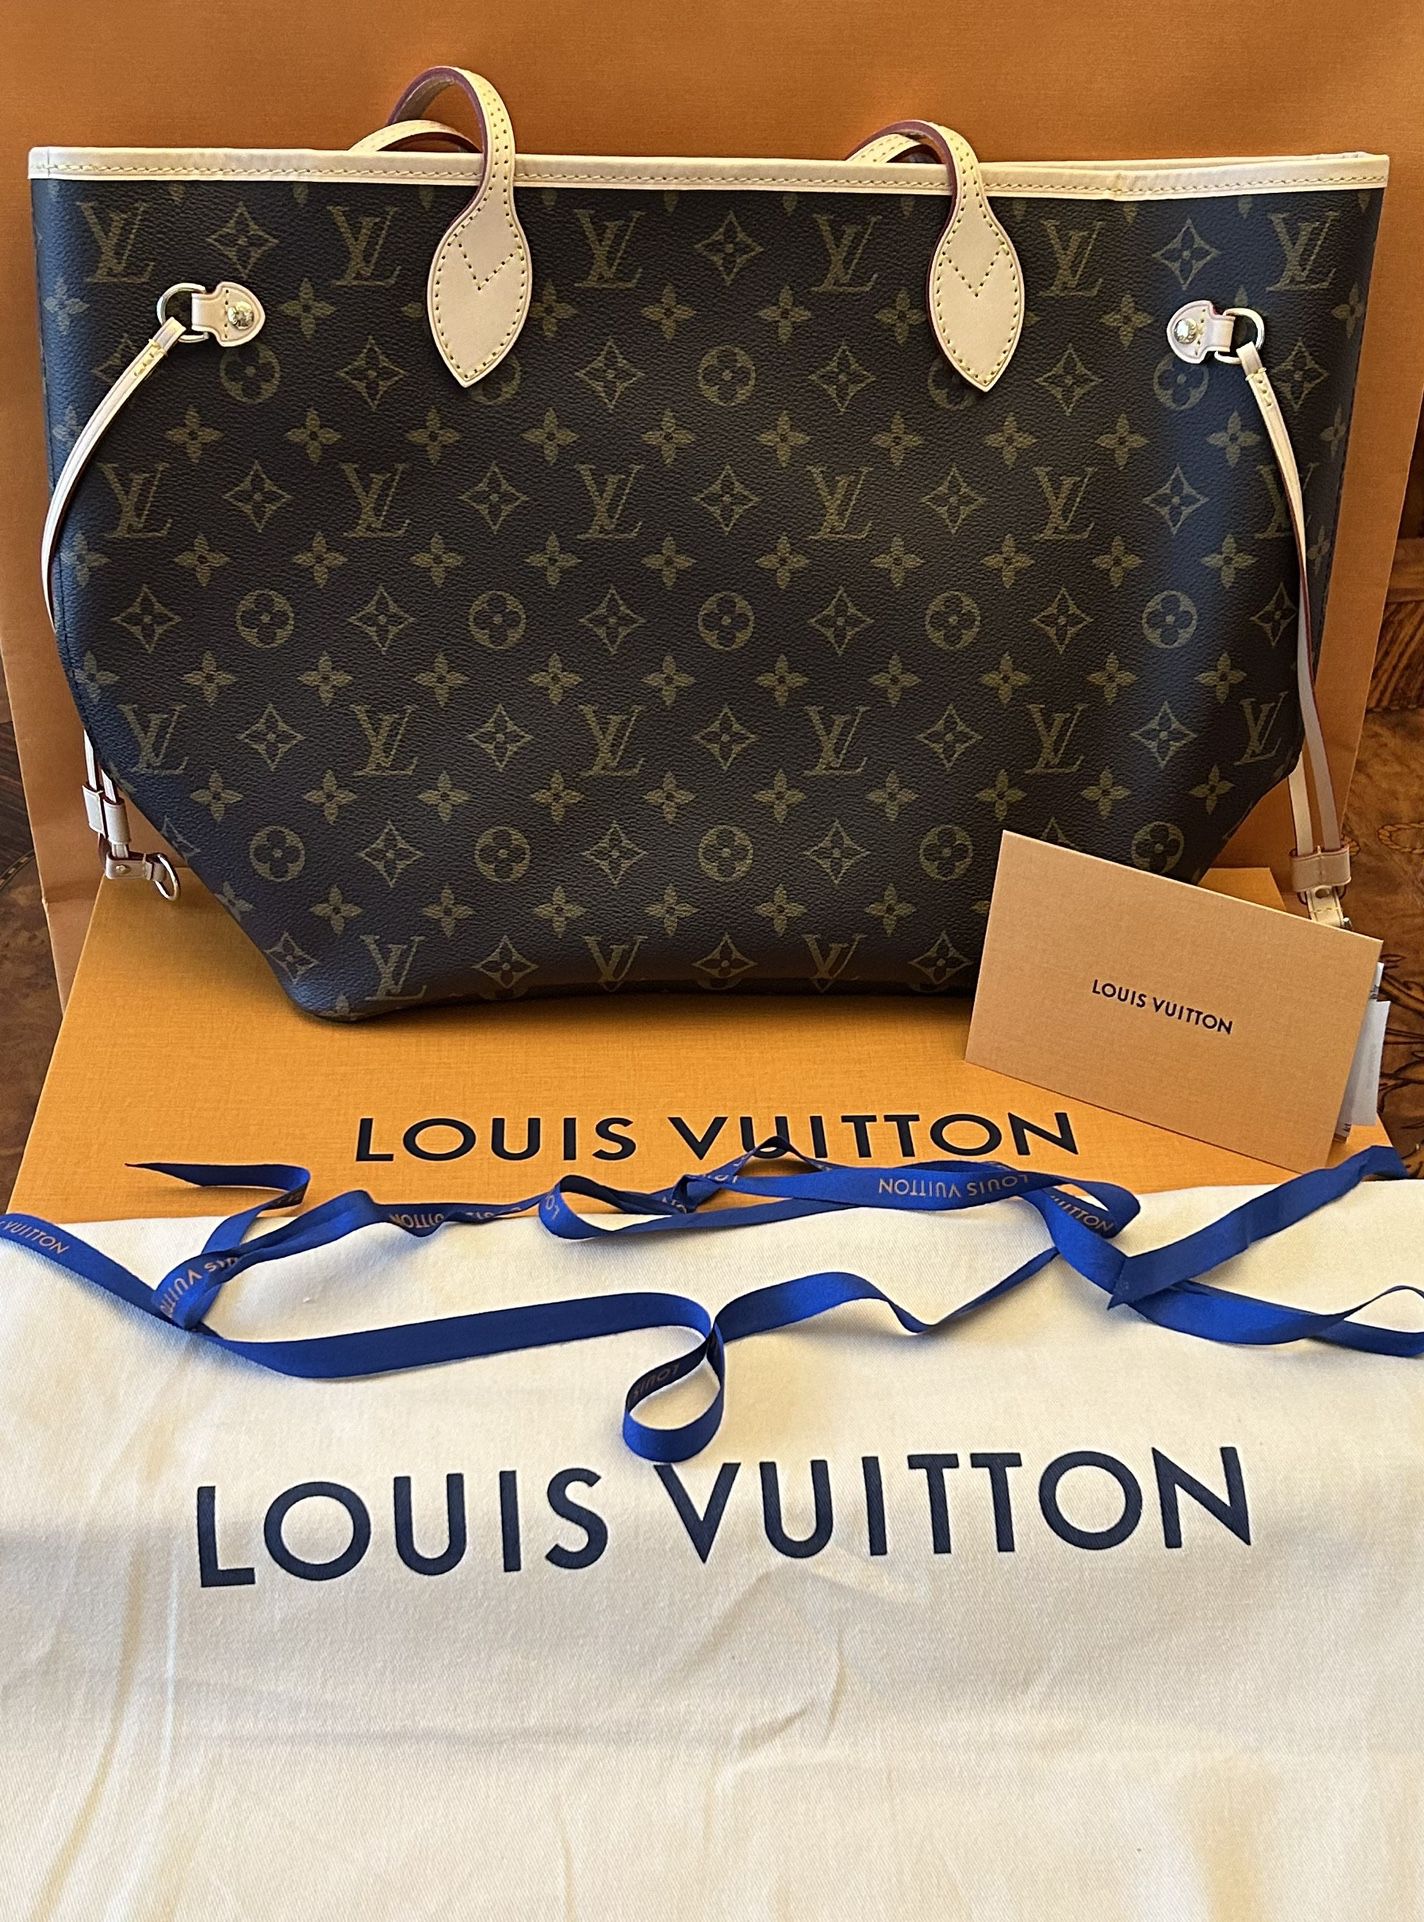 100% Authentic & Brand NEW Louis Vuitton Neverfull MM Monogram Bag